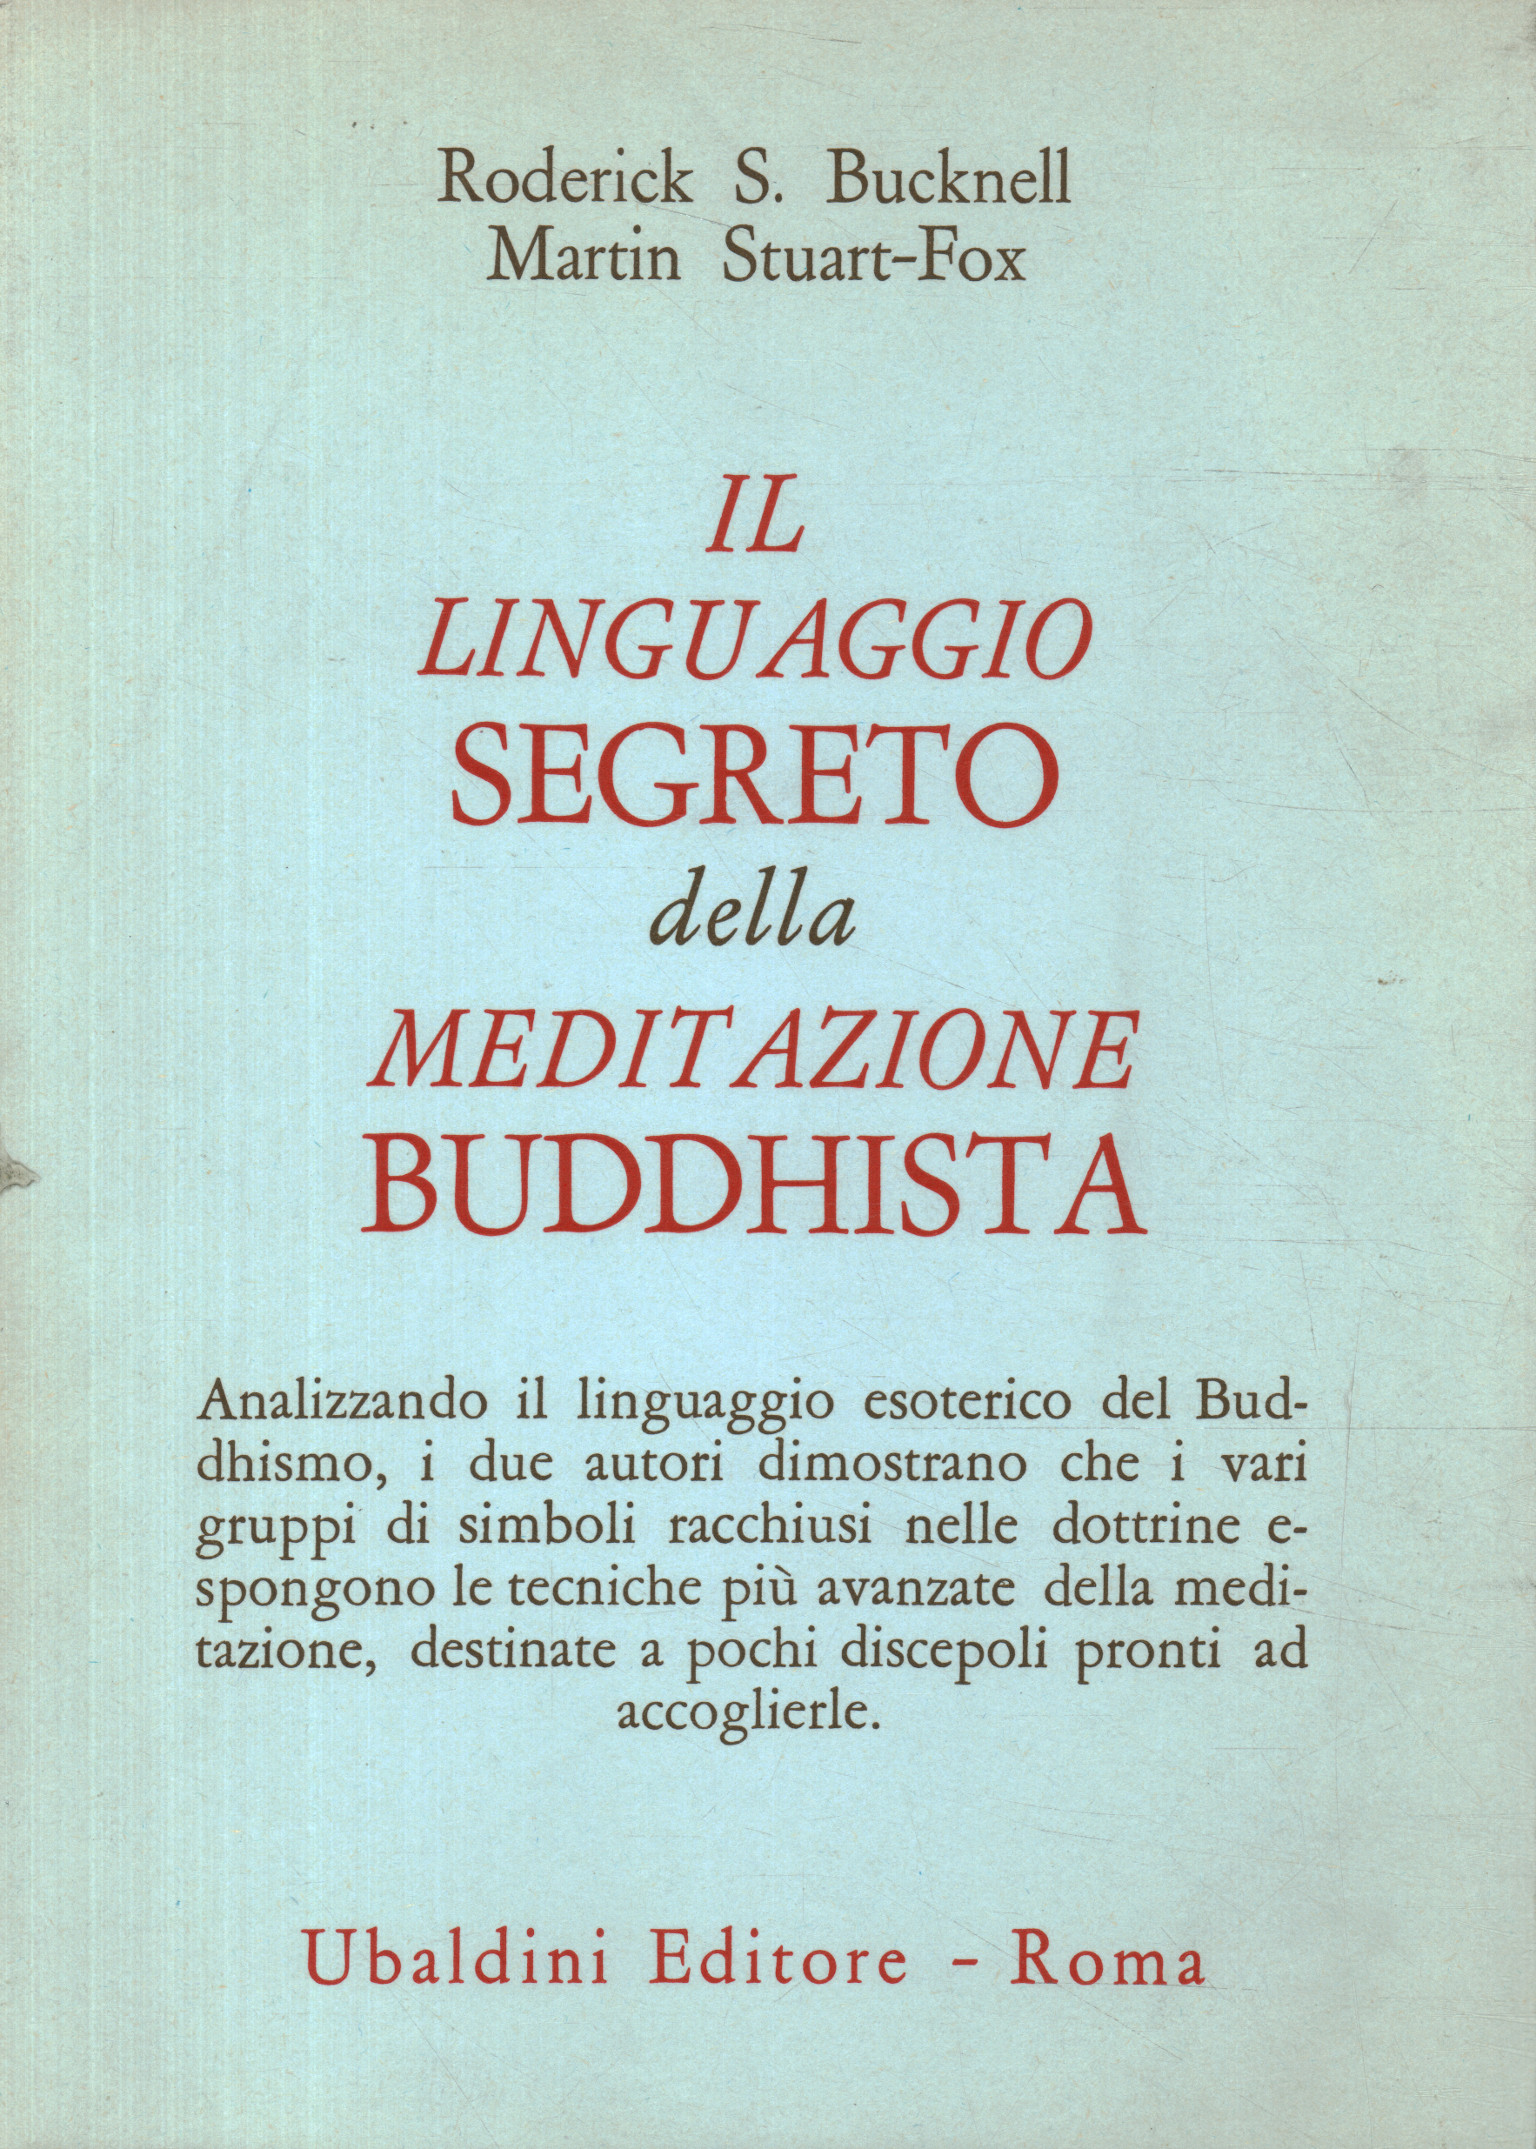 The secret language of meditation